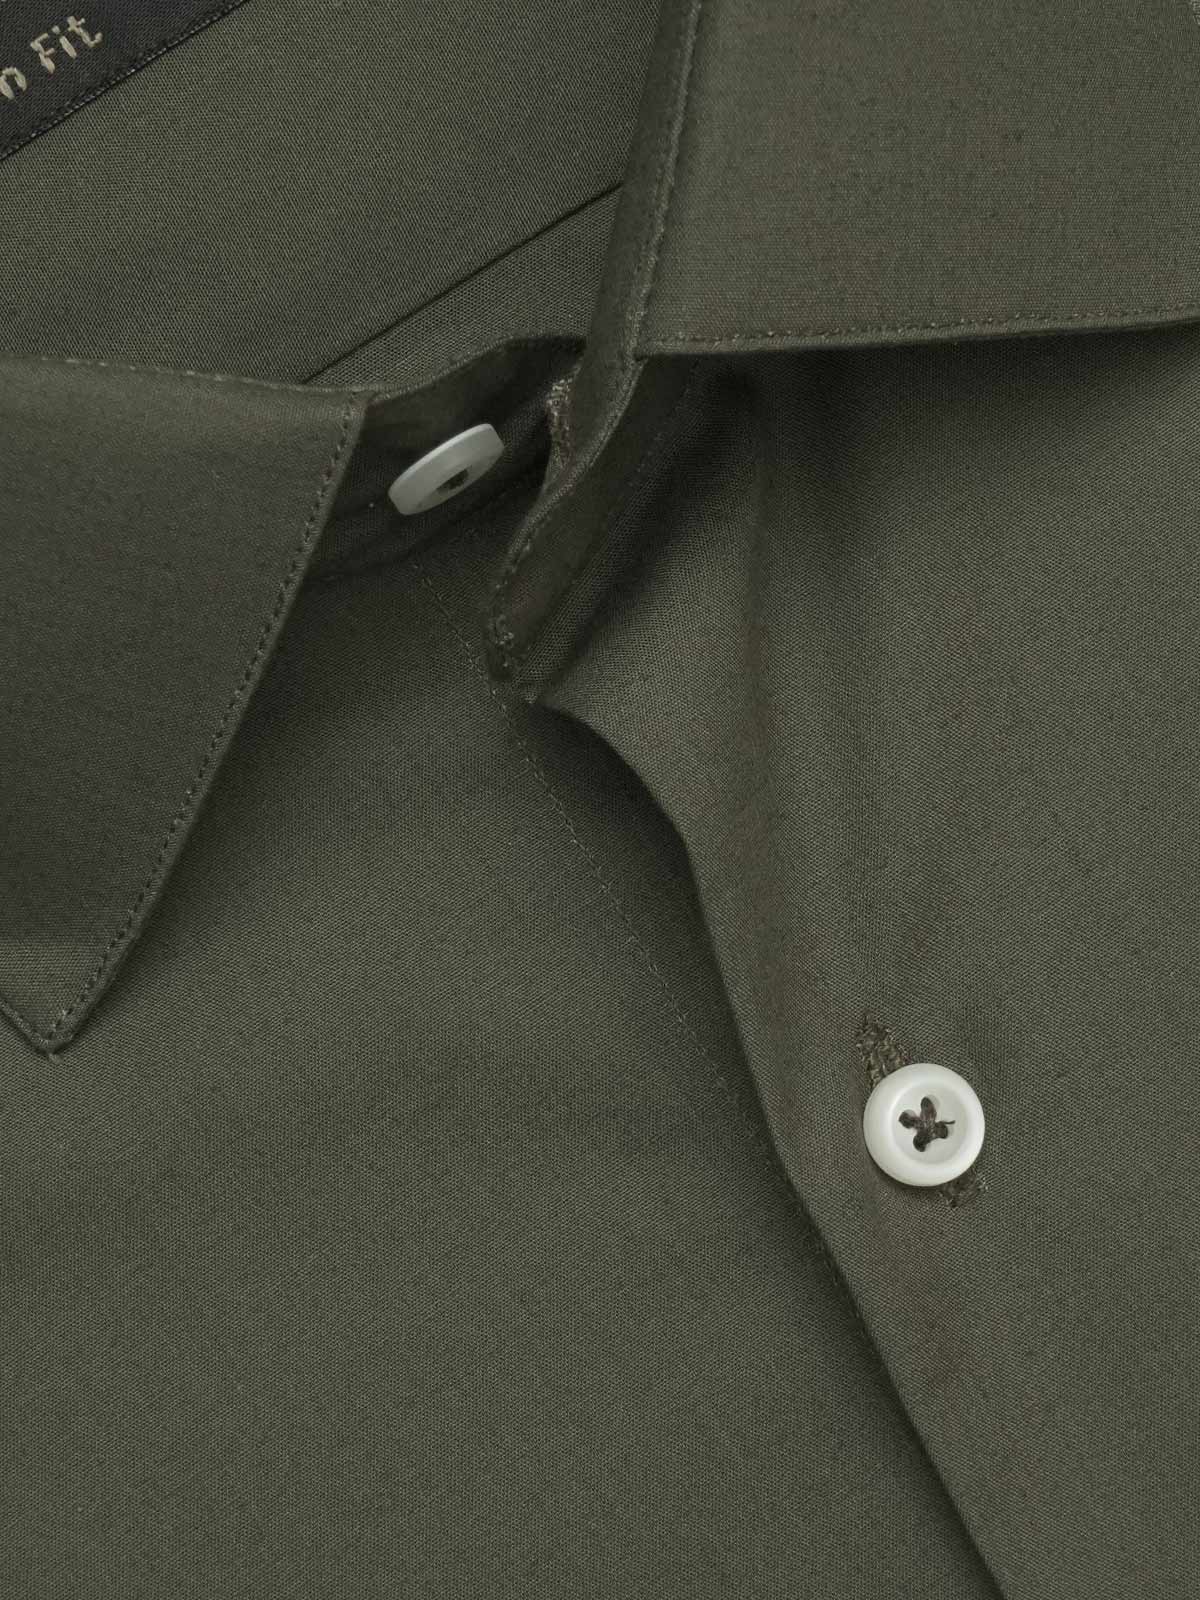 Olive Plain, Elite Edition, French Collar Men’s Formal Shirt (FS-488)